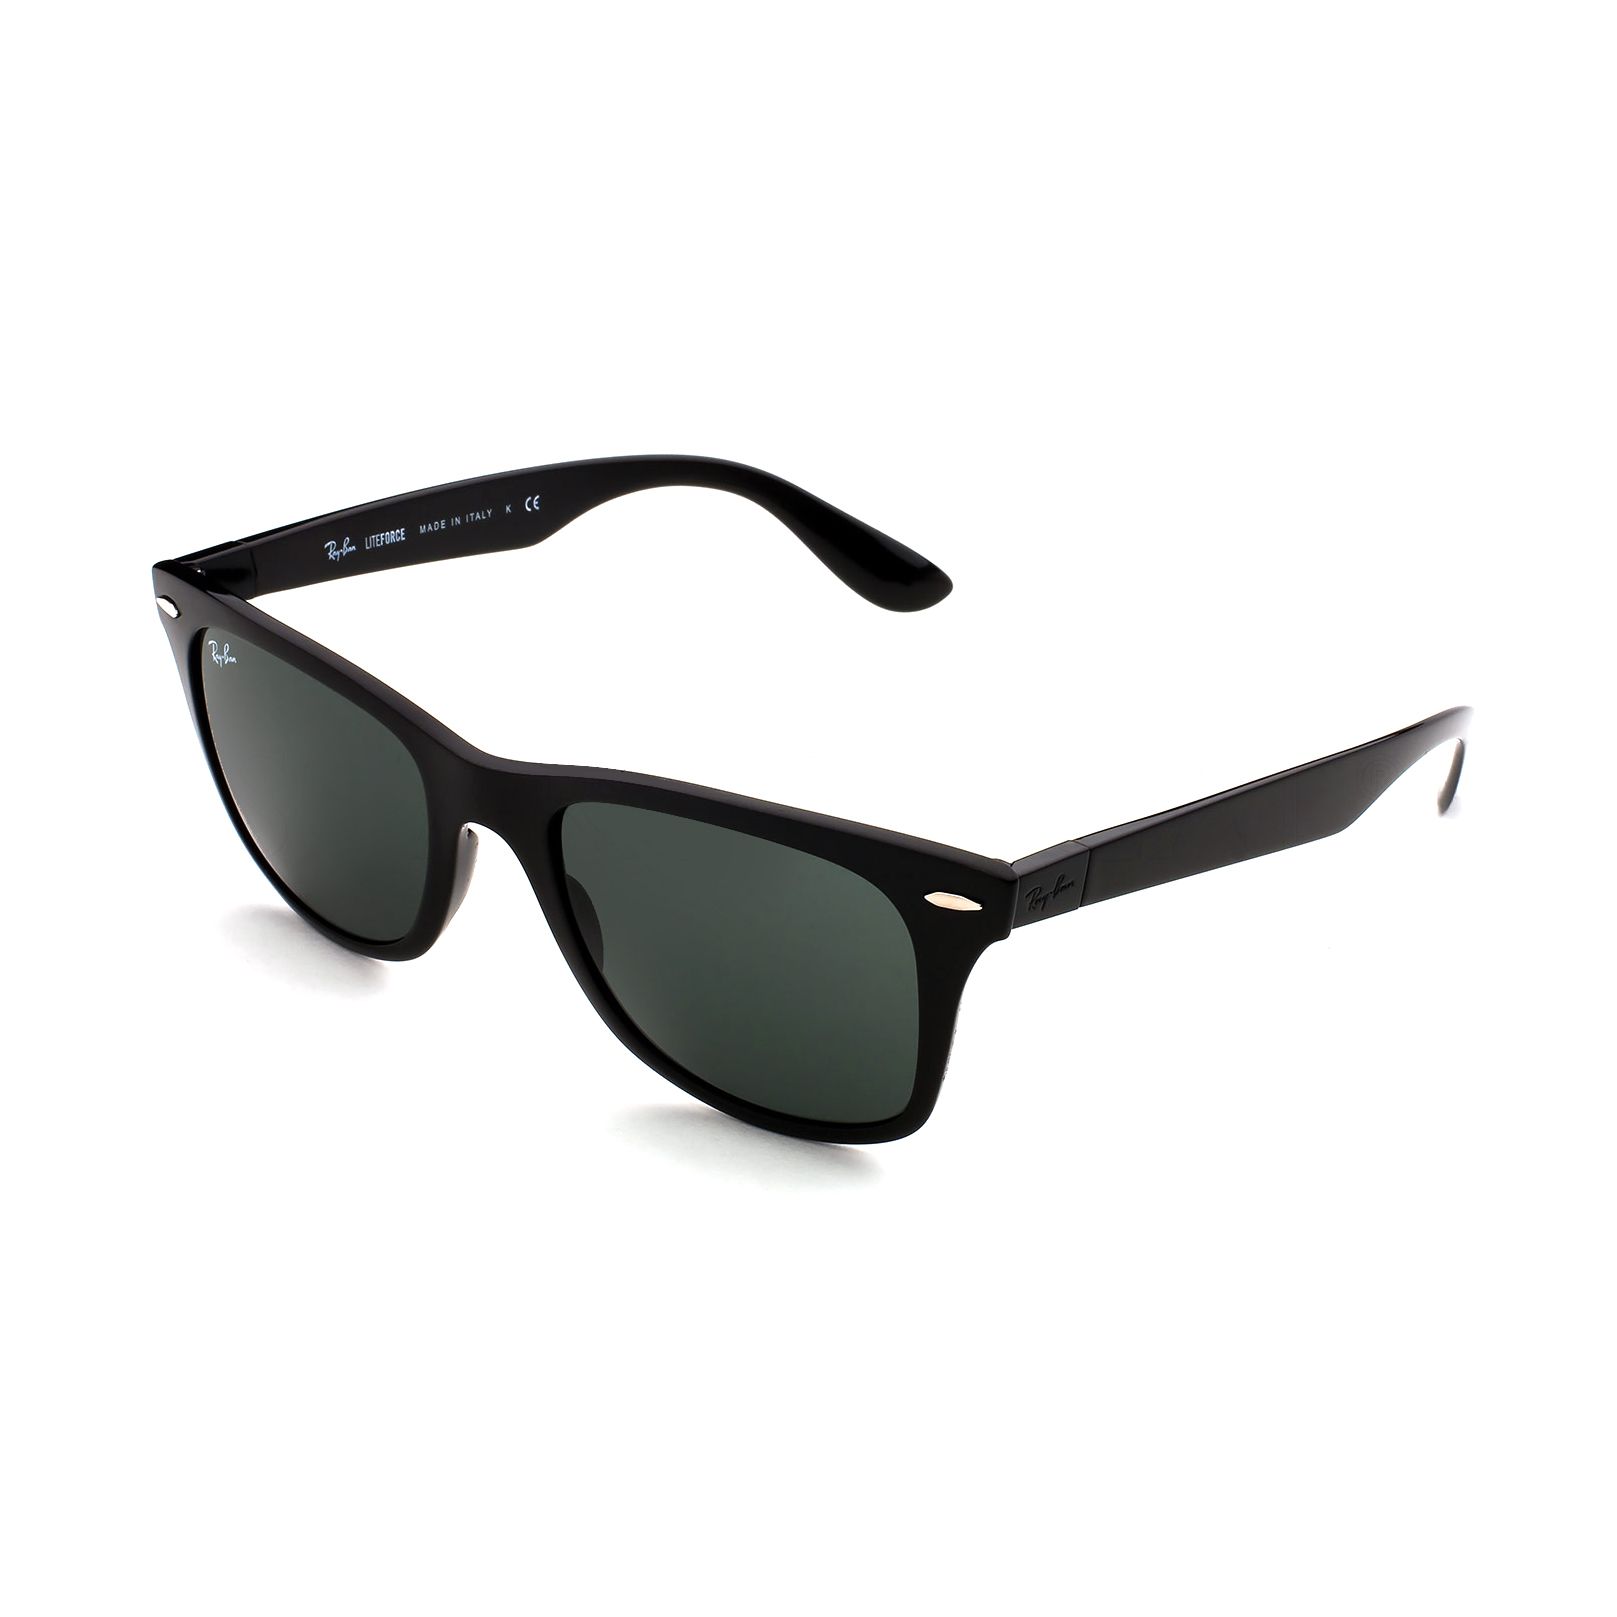 Wayfarer Liteforce Sunglasses RB4195 601 71 - size 52